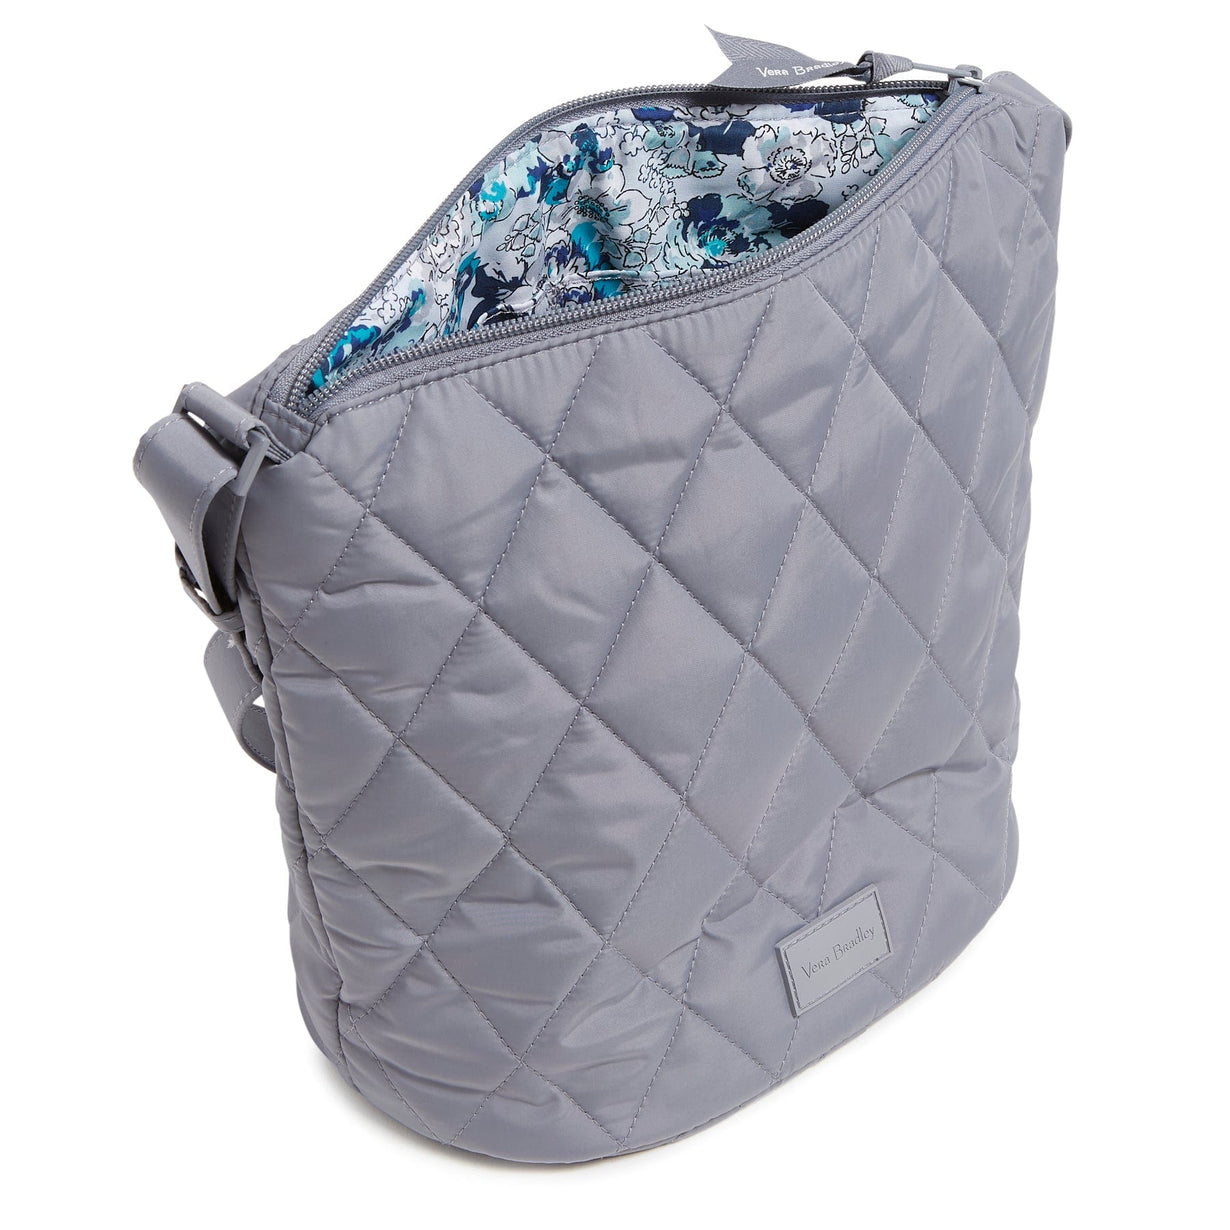 Vera Bradley Outlet | Dual Strap Tote Bag – Vera Bradley Outlet Store